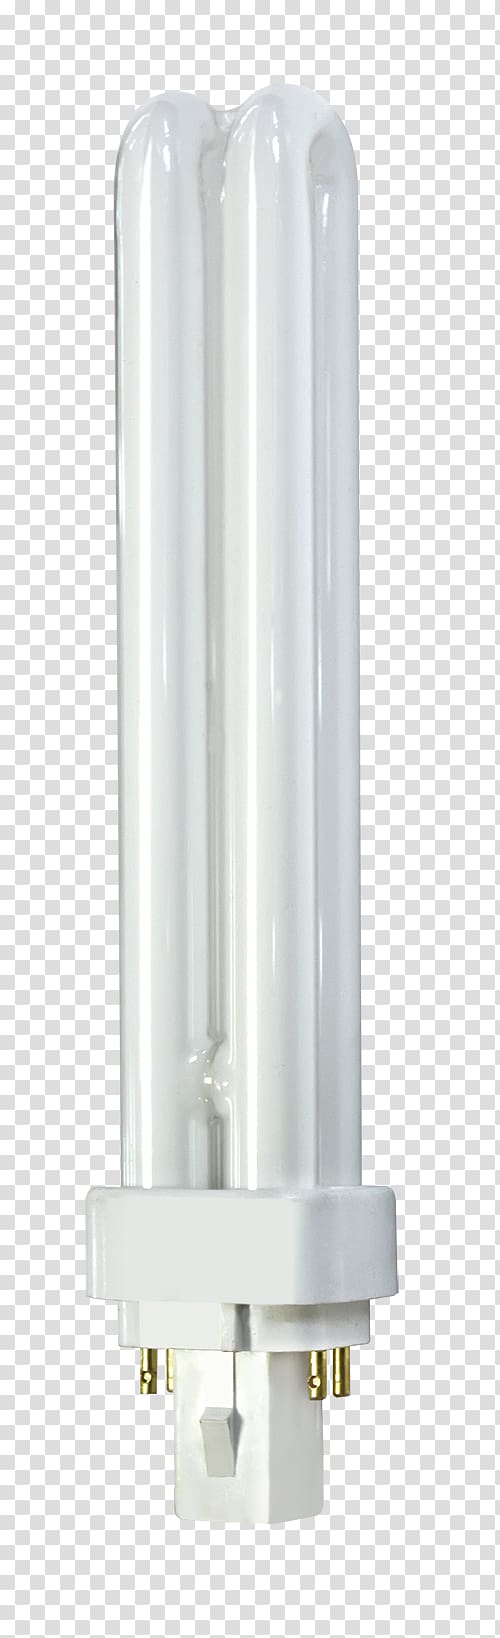 Compact fluorescent lamp Lighting Edison screw Electrical ballast, girlanda transparent background PNG clipart